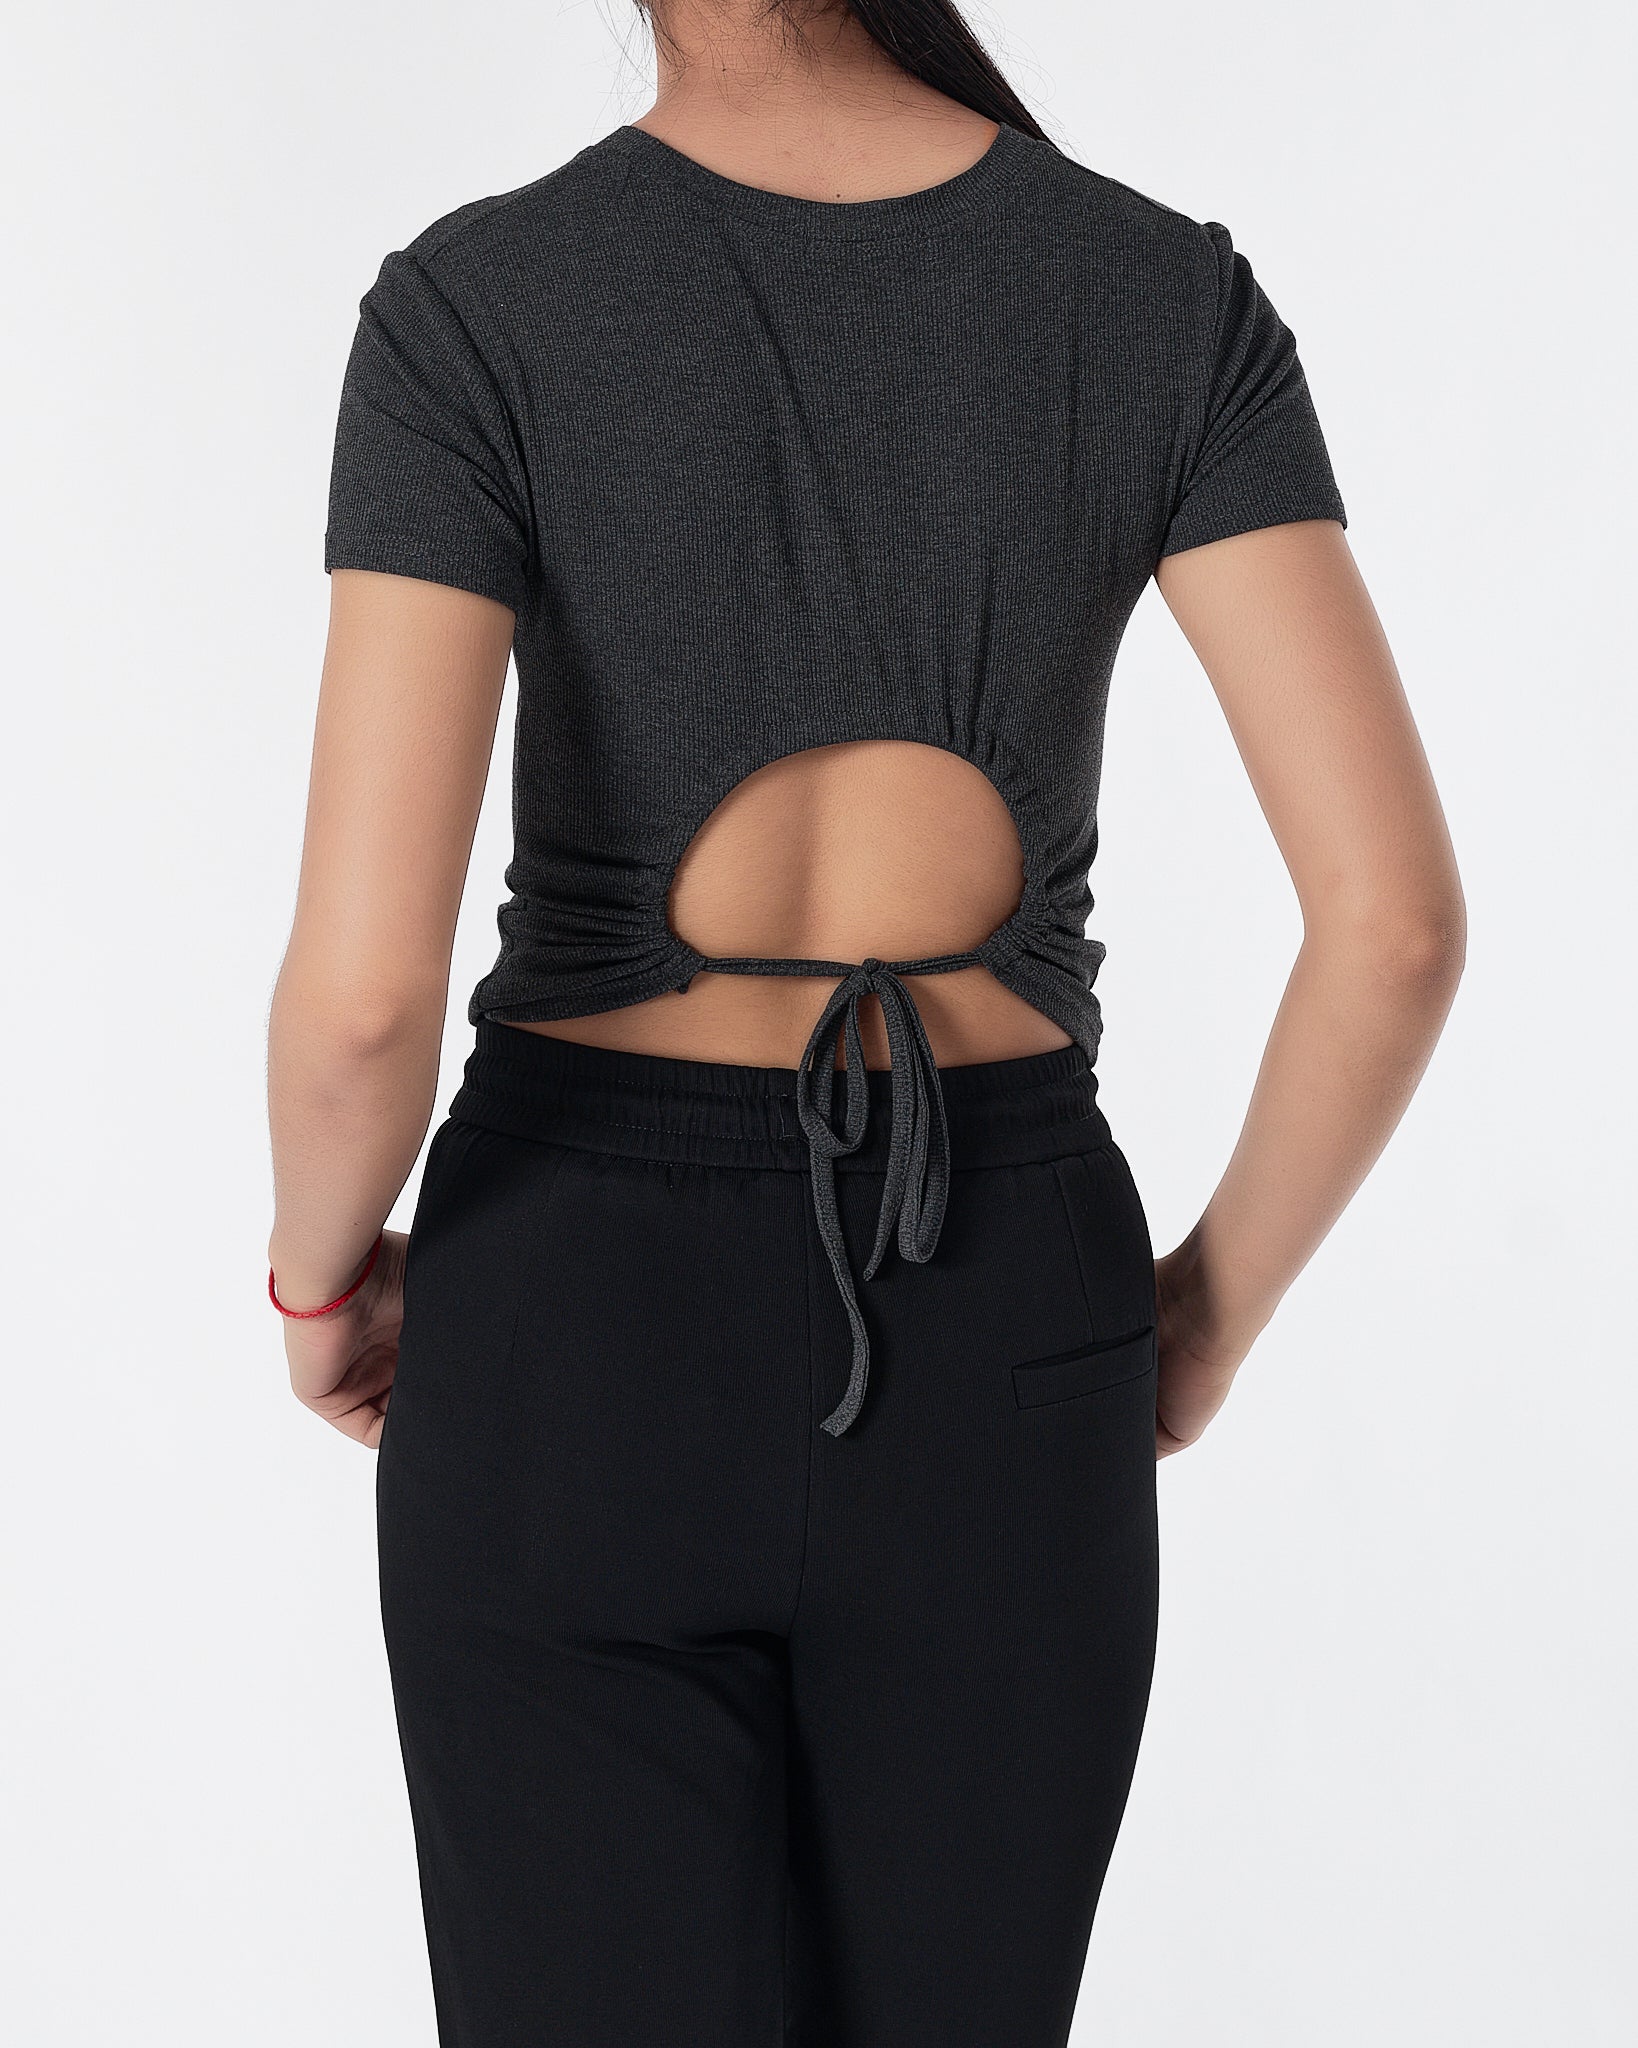 Plain Color Side String  Lady Black T-Shirt 10.90